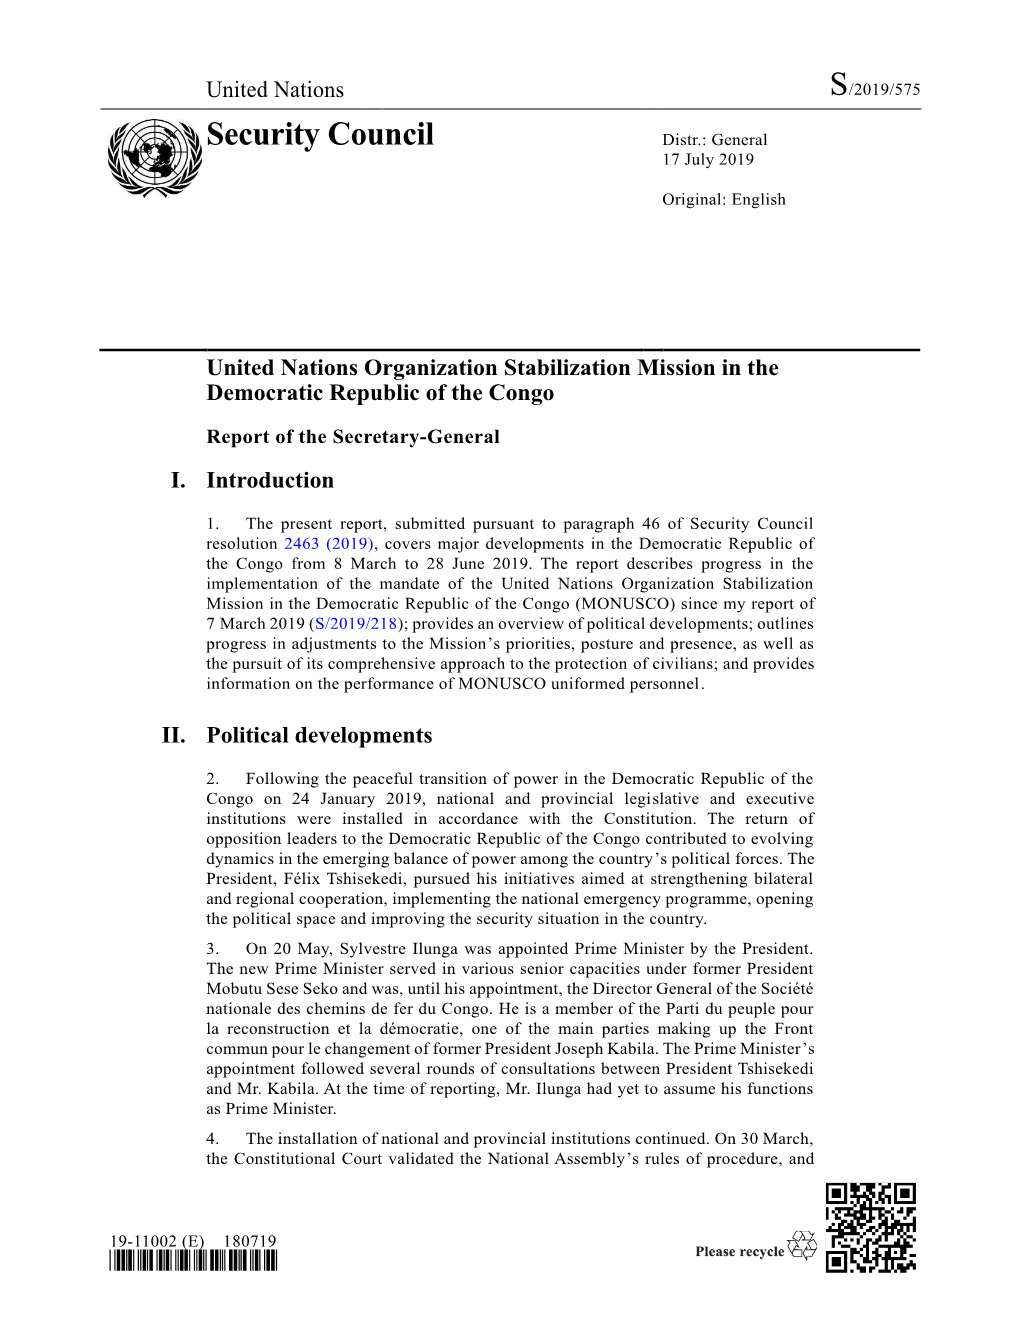 United Nations Organization Stabilization Mission in the Democratic Republic of the Congo